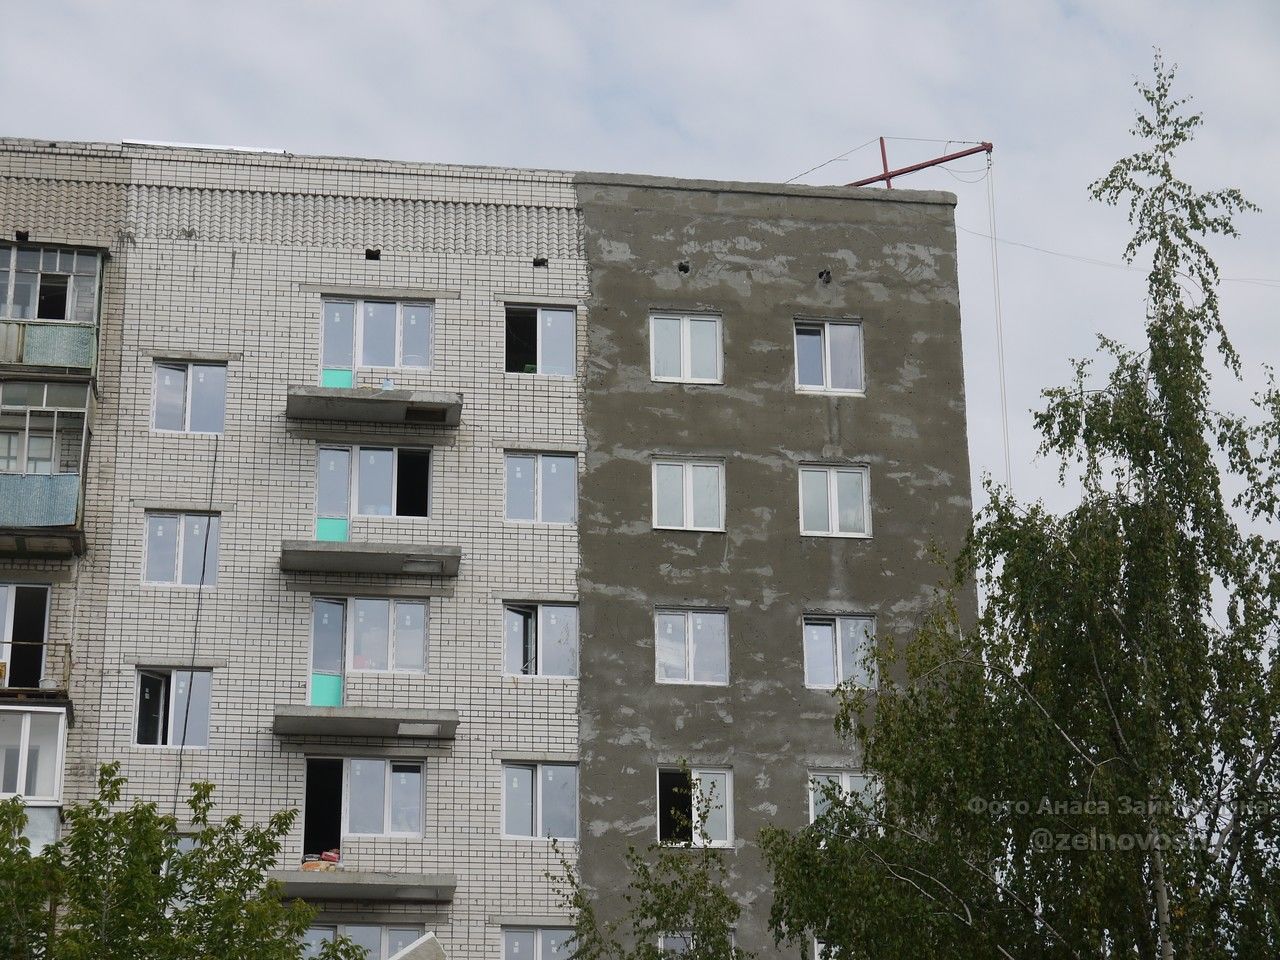 Фасад дома № 39-а по улице Ленина приобретает новую штукатурку